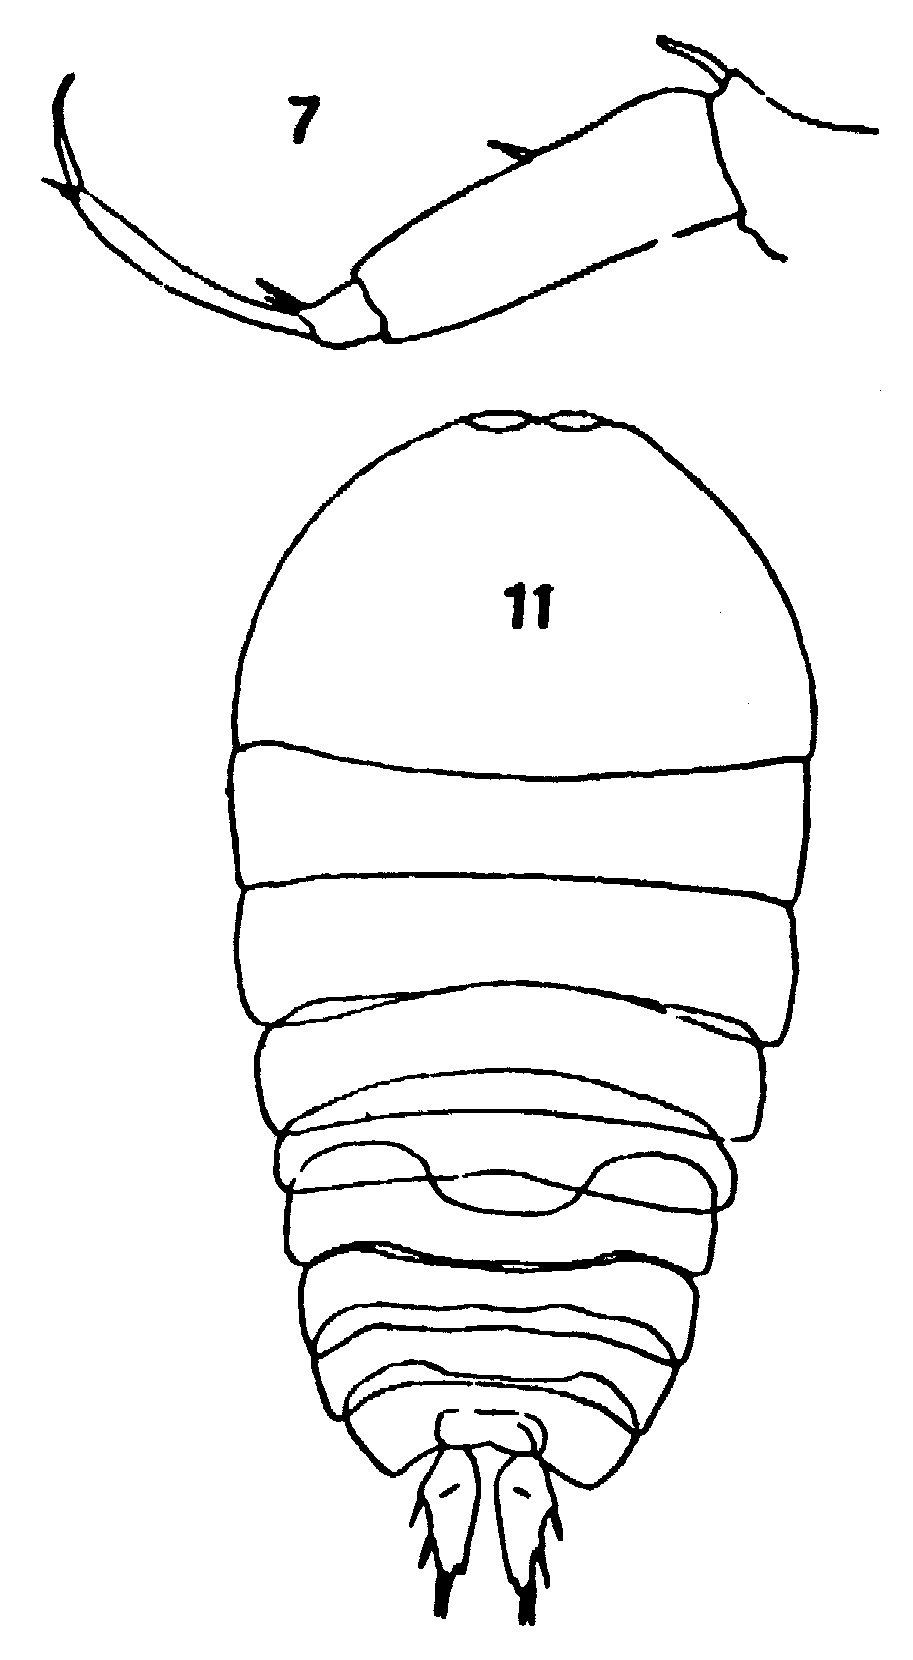 Species Sapphirina stellata - Plate 4 of morphological figures